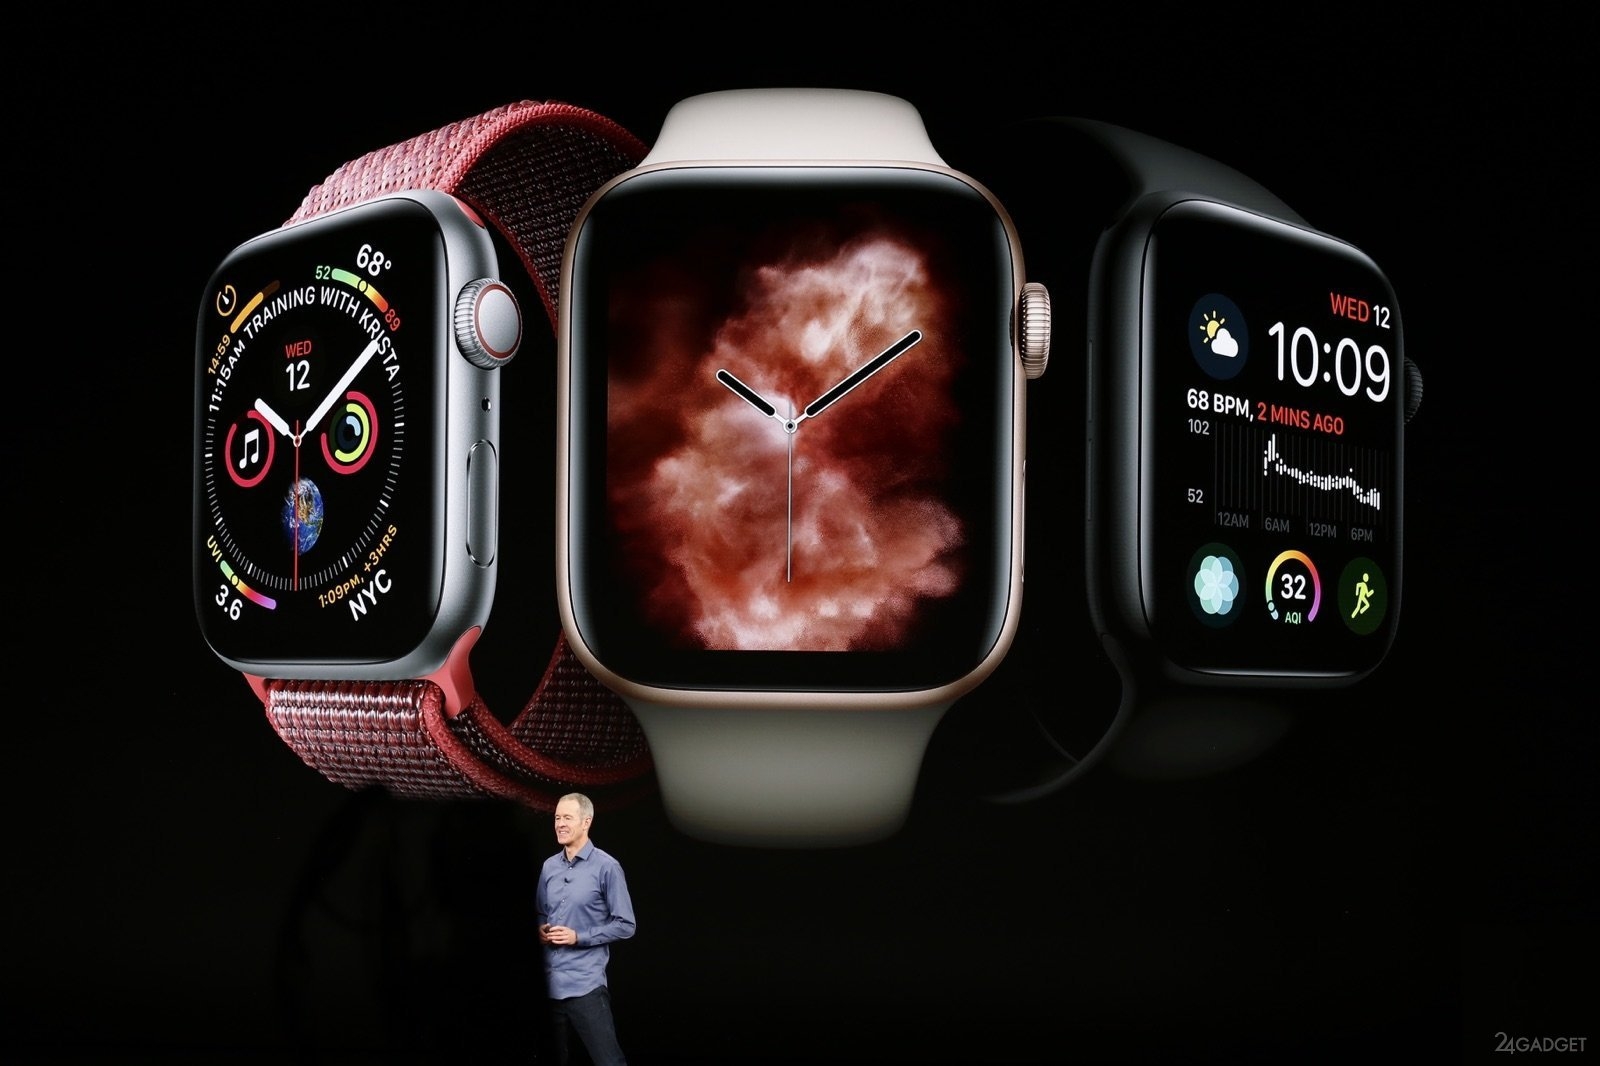 Бесплатная заставка на смарт часы. Эпл вотч 4. Apple watch 2020. Apple watch t800. Аппл вотч си 2020.